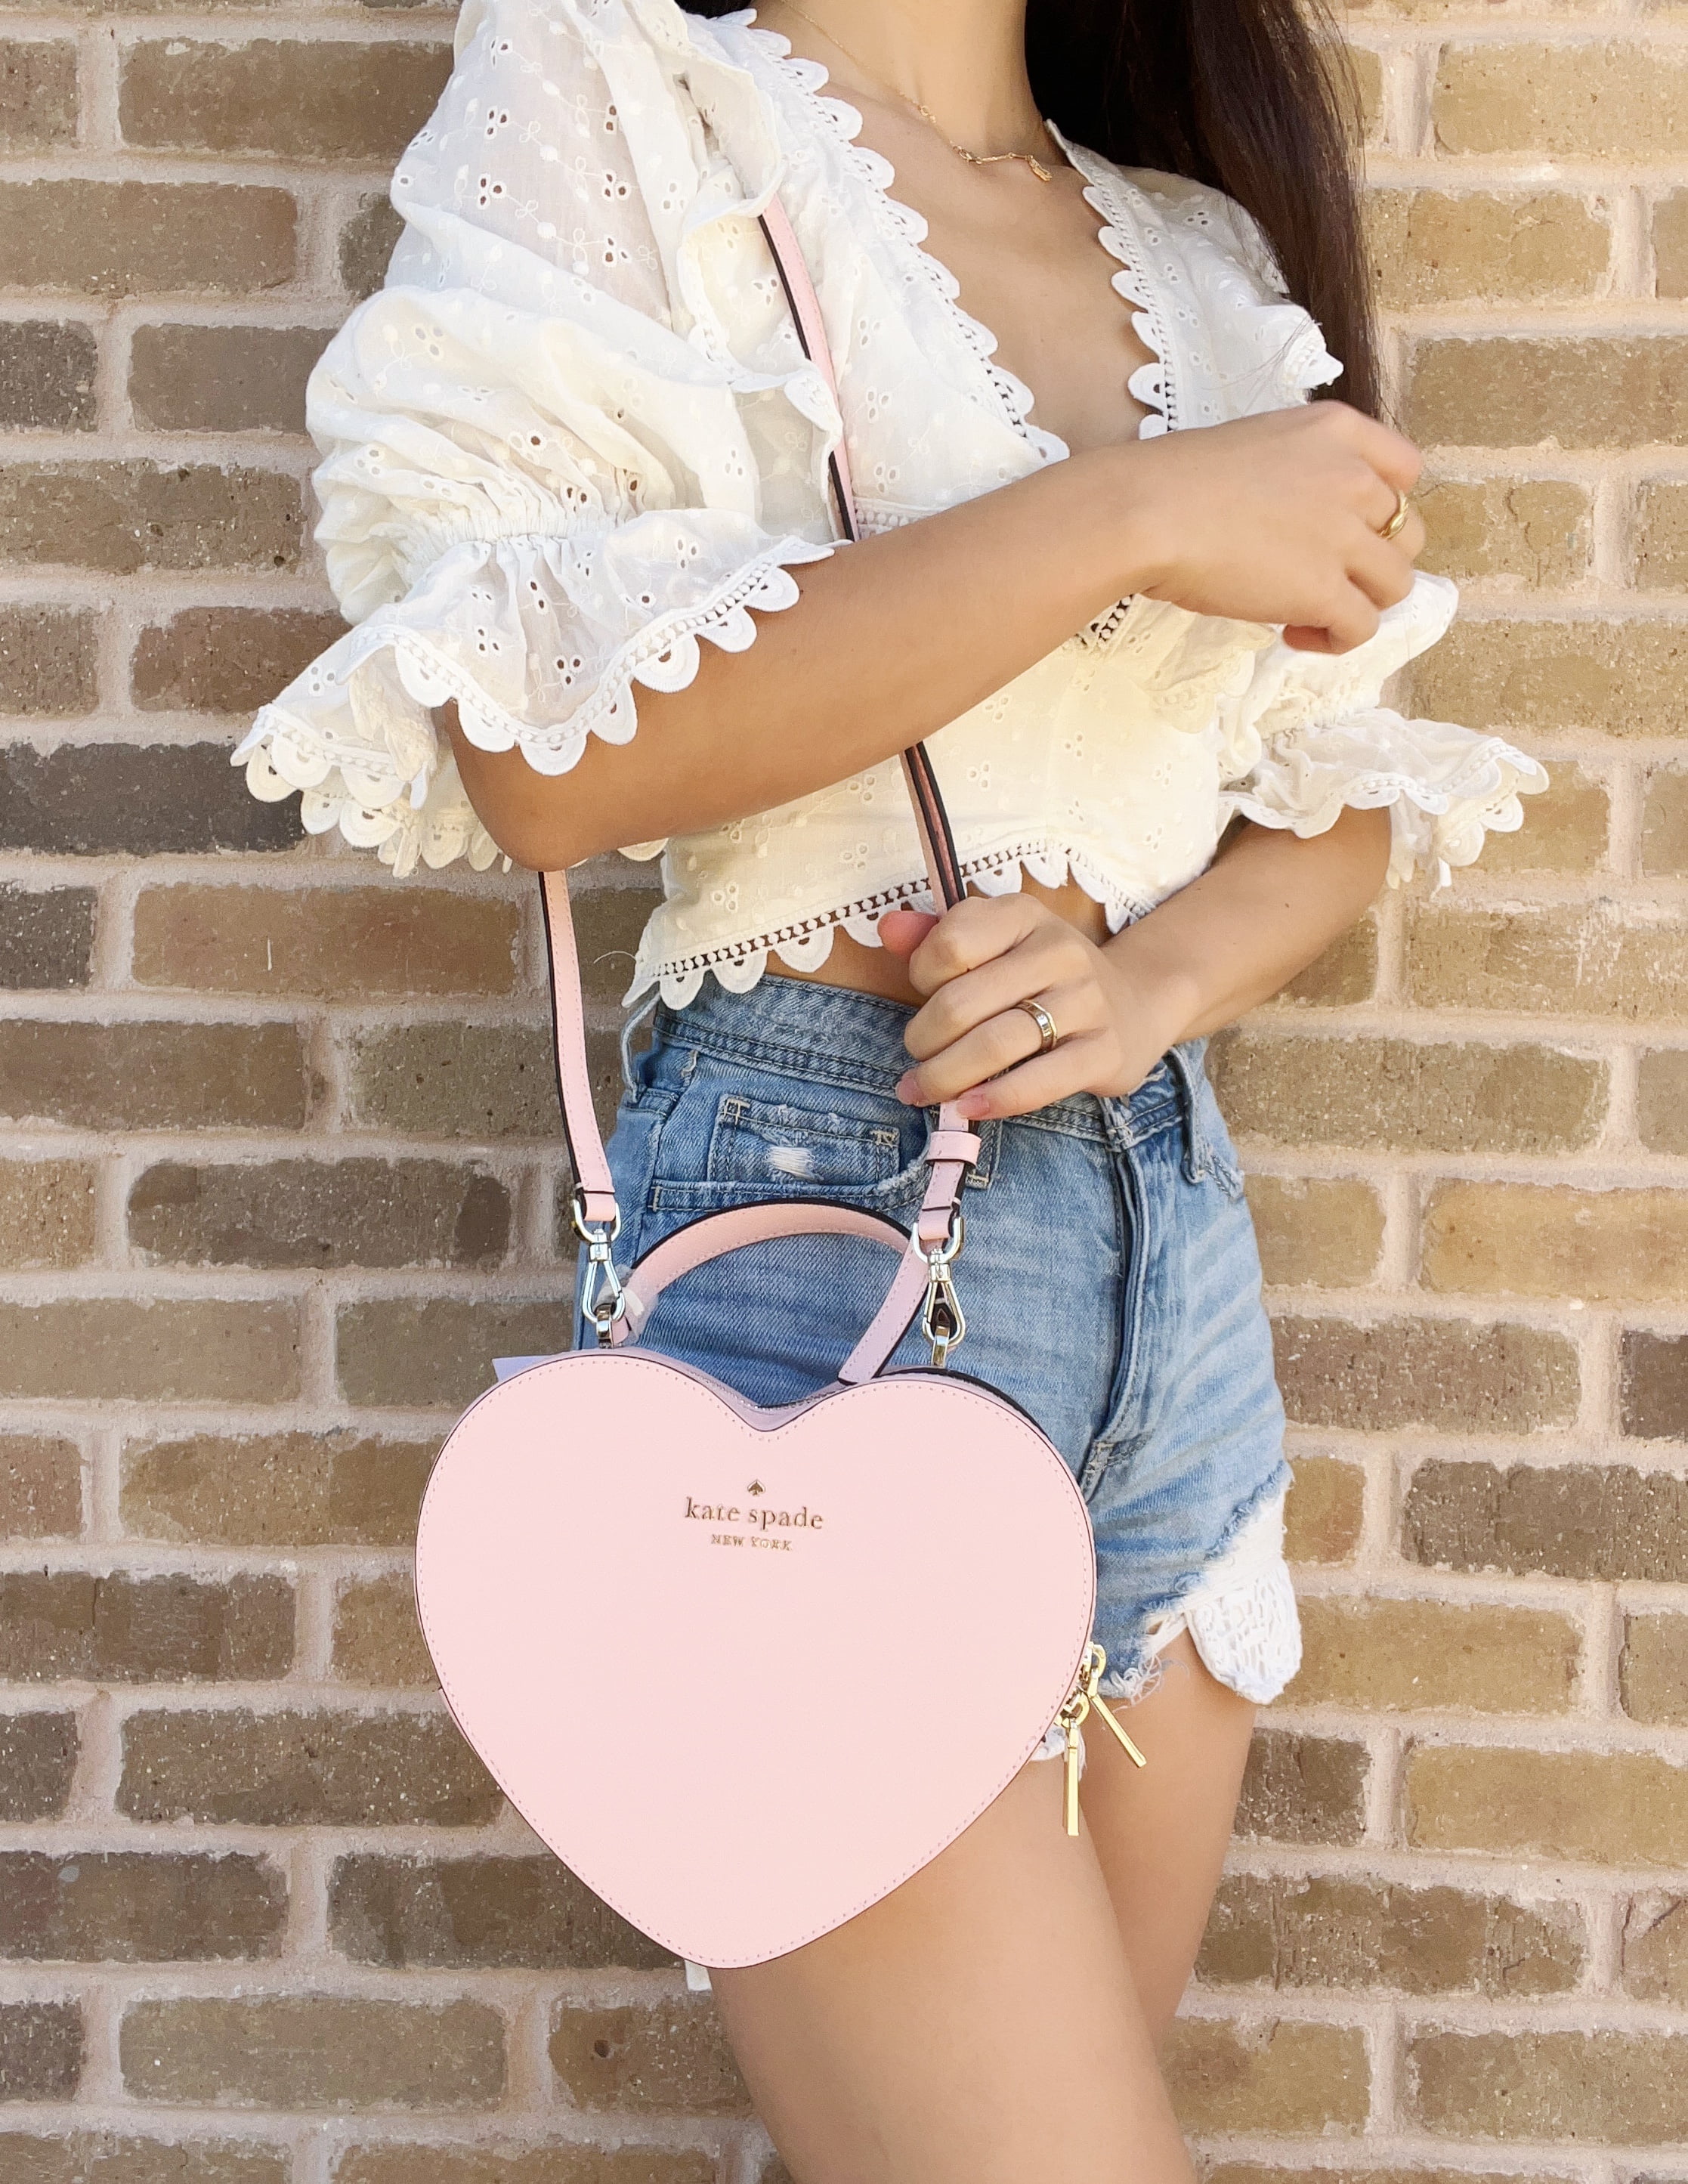 Kate spade love shack flutter hearts printed heart purse crossbody pink  black